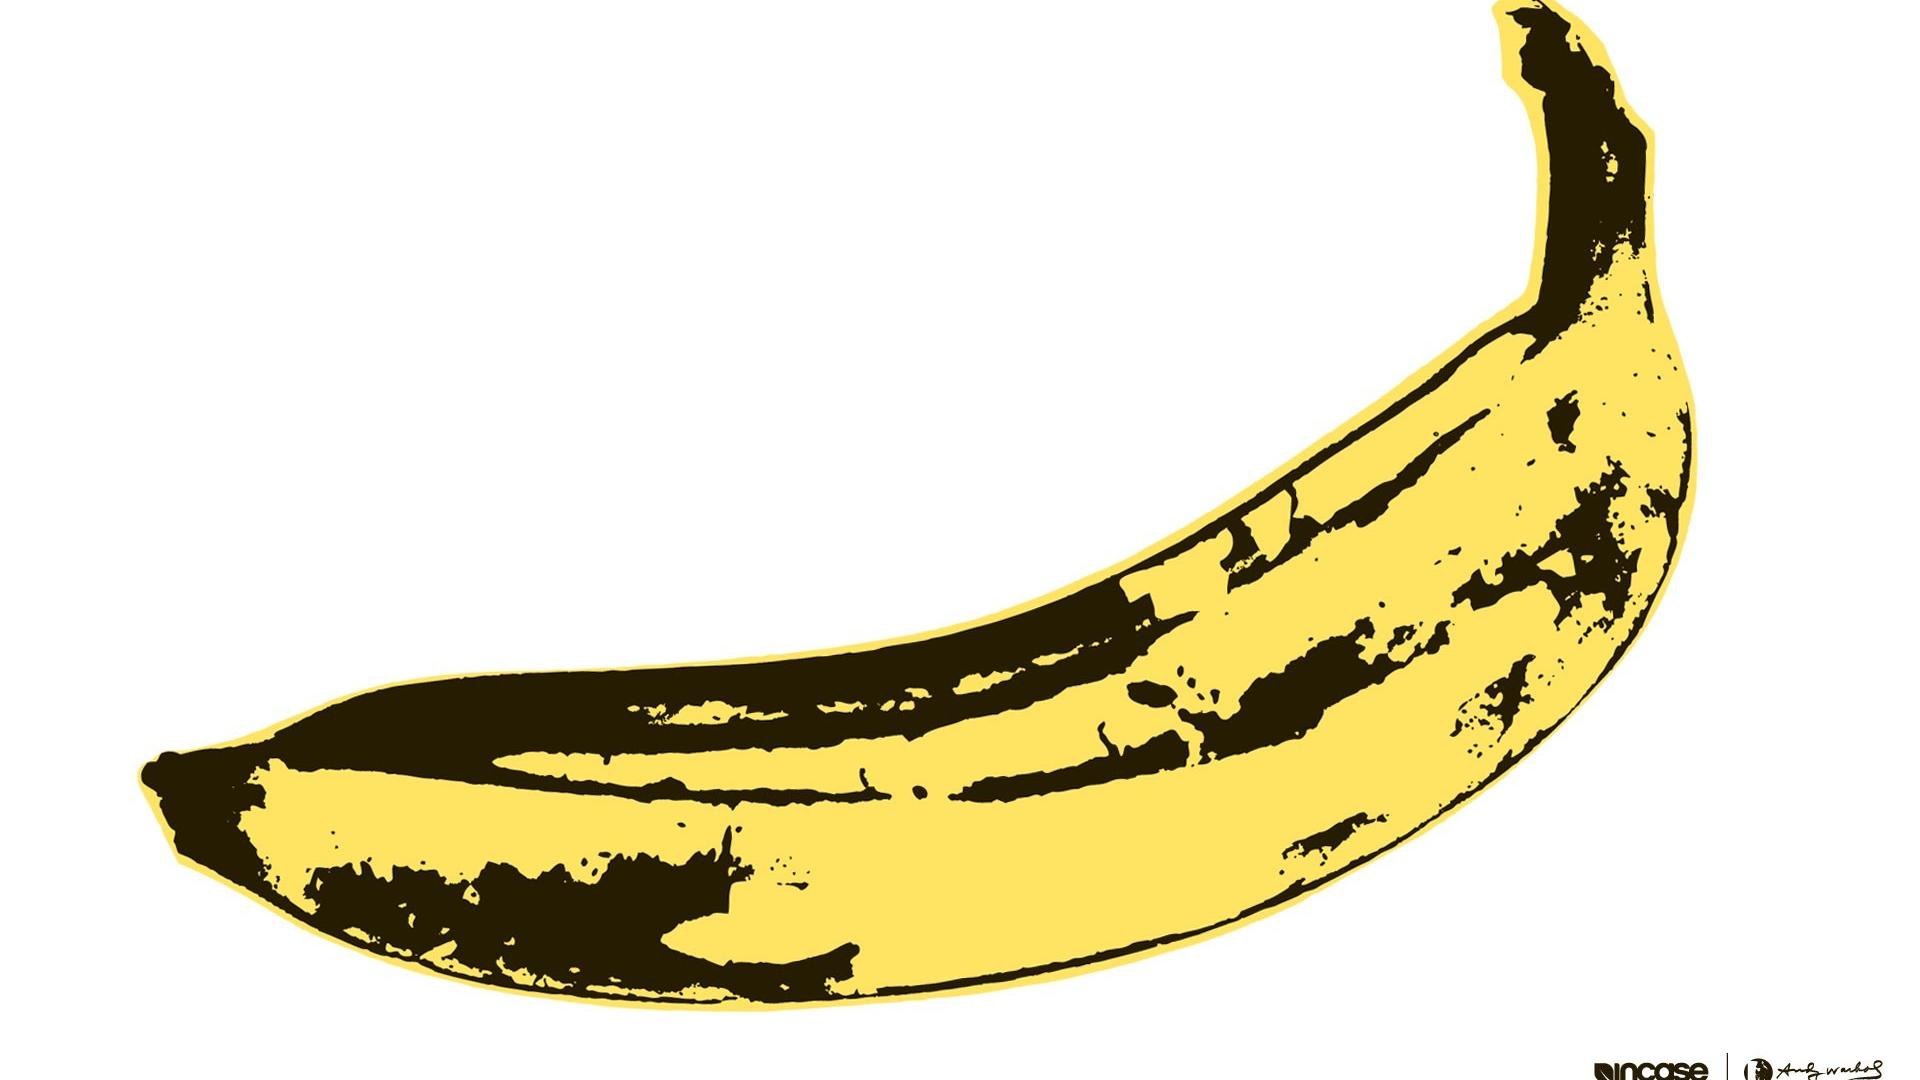 Wallpapers Andy Warhol Bananas Velvet Underground Incase Us Com